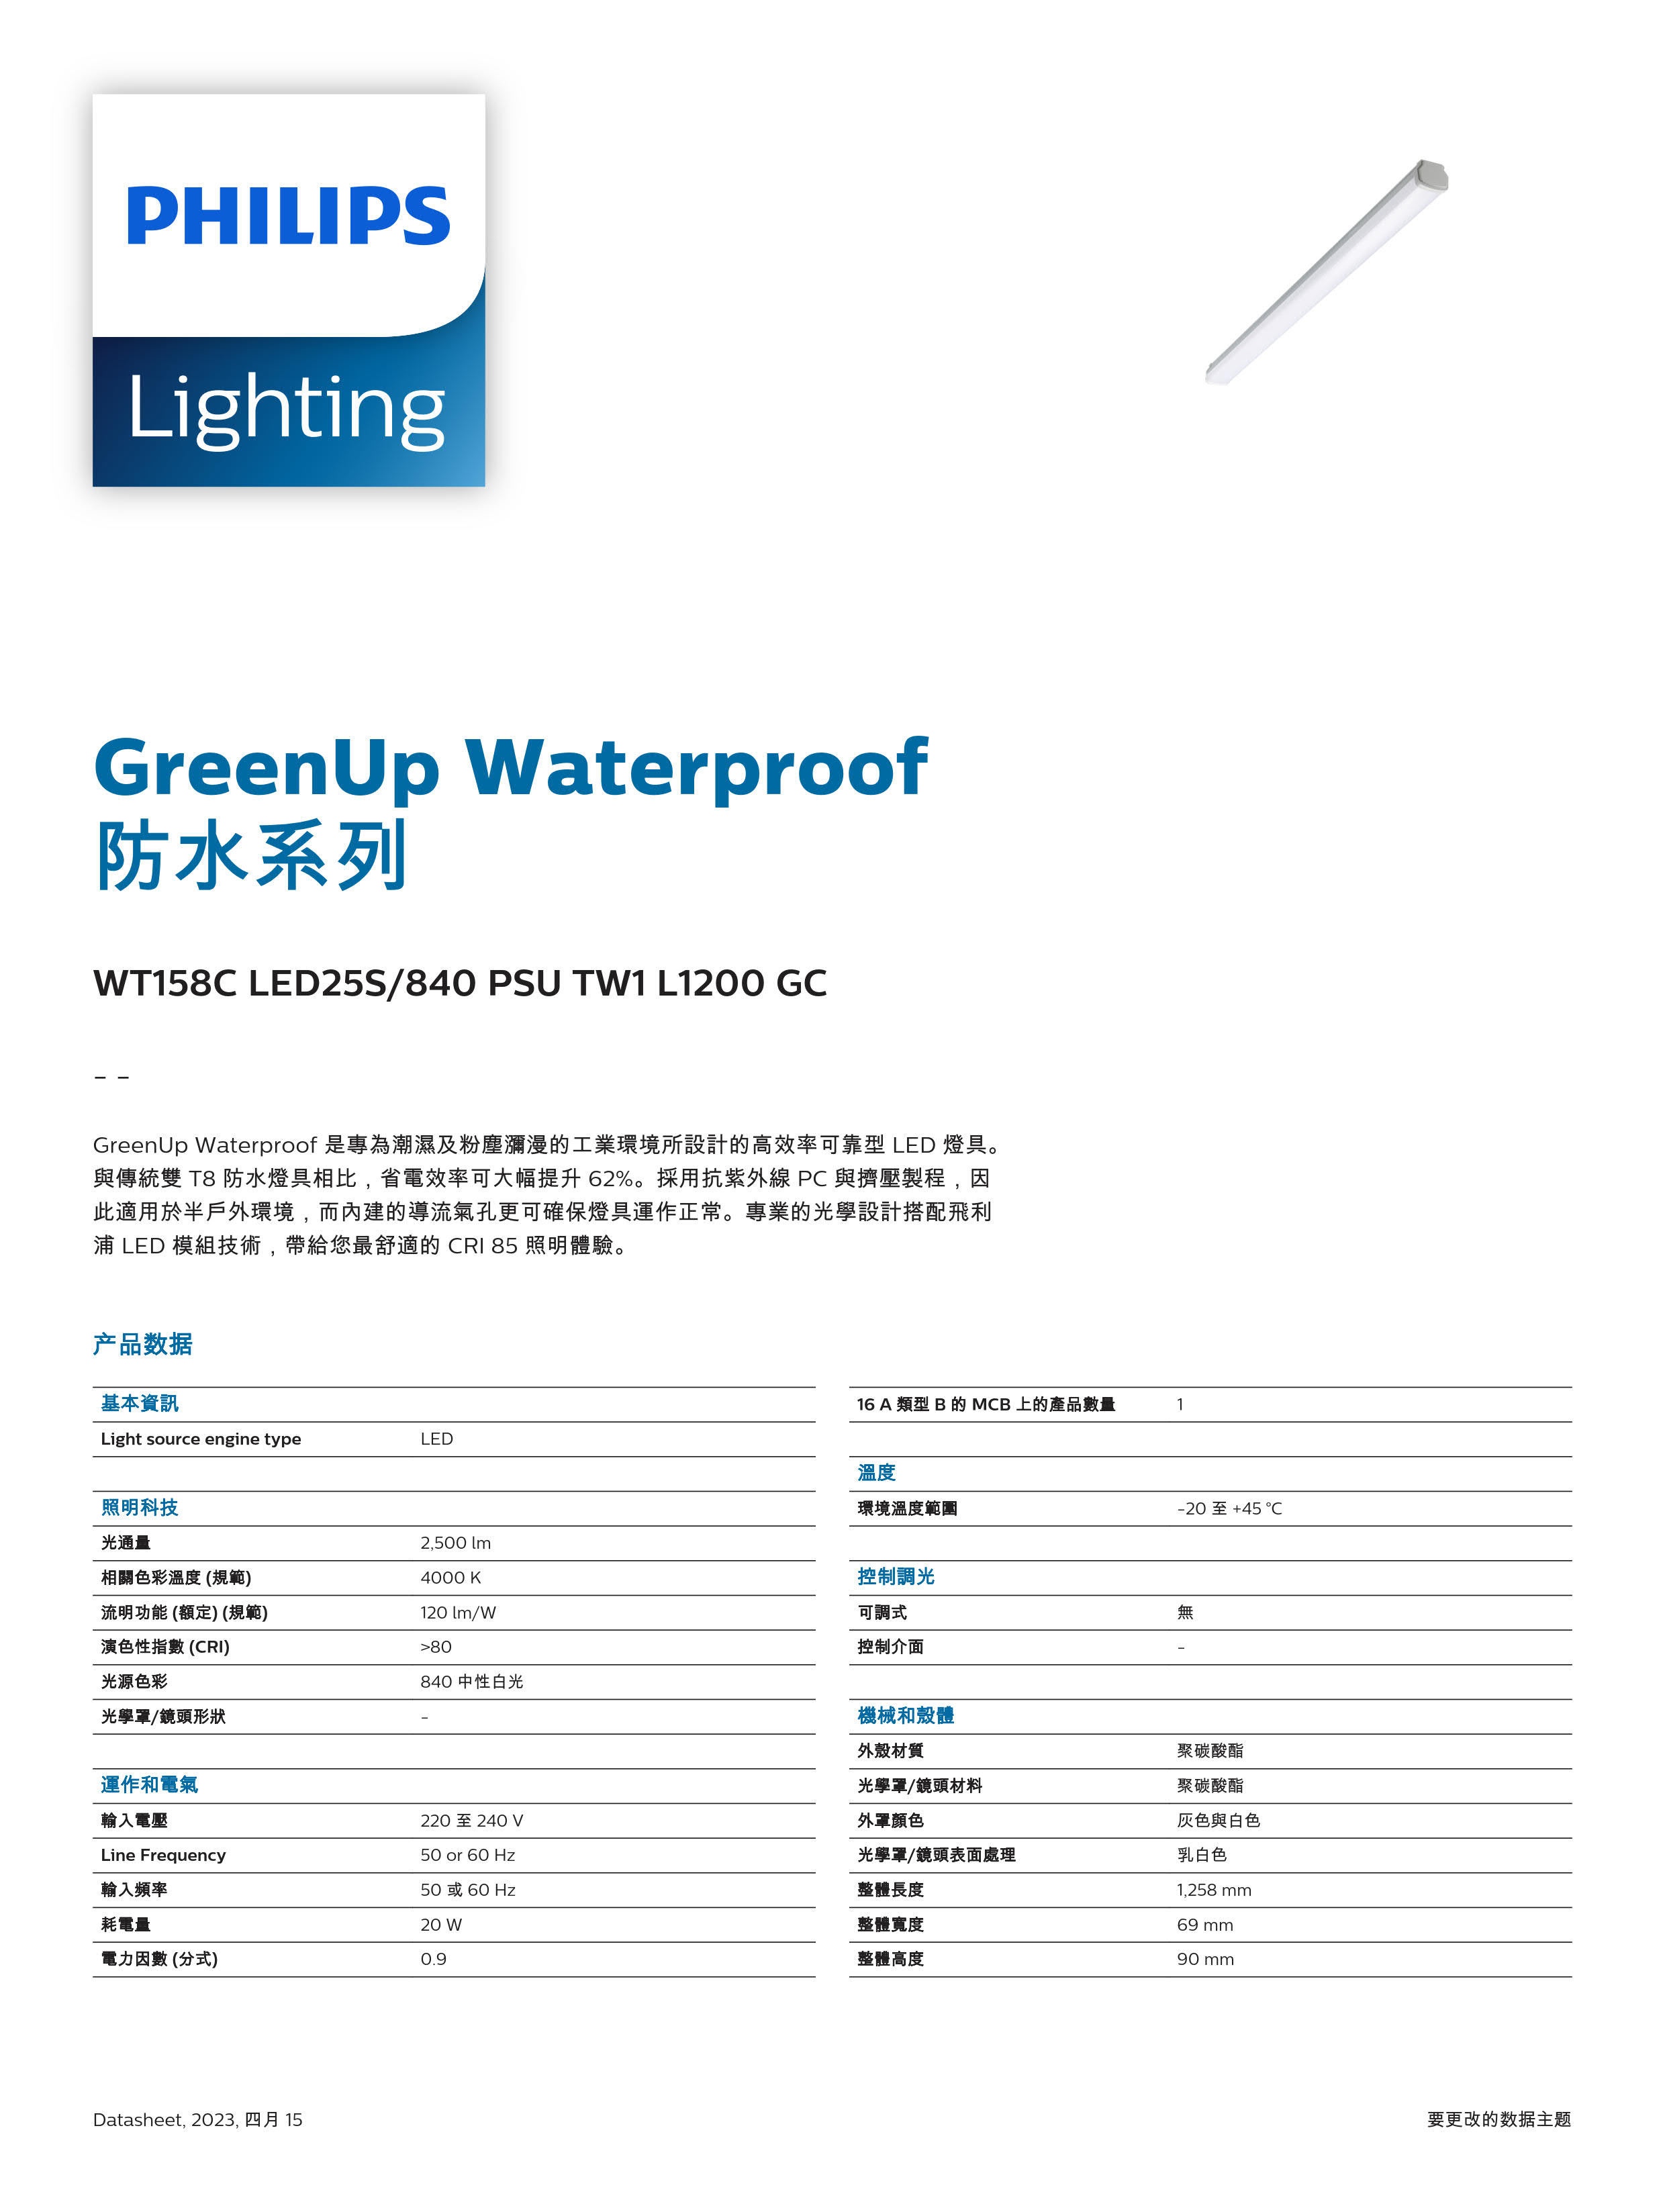 PHILIPS Waterproof WT158C LED25S/840 PSU TW1 L1200 GC 911401895280